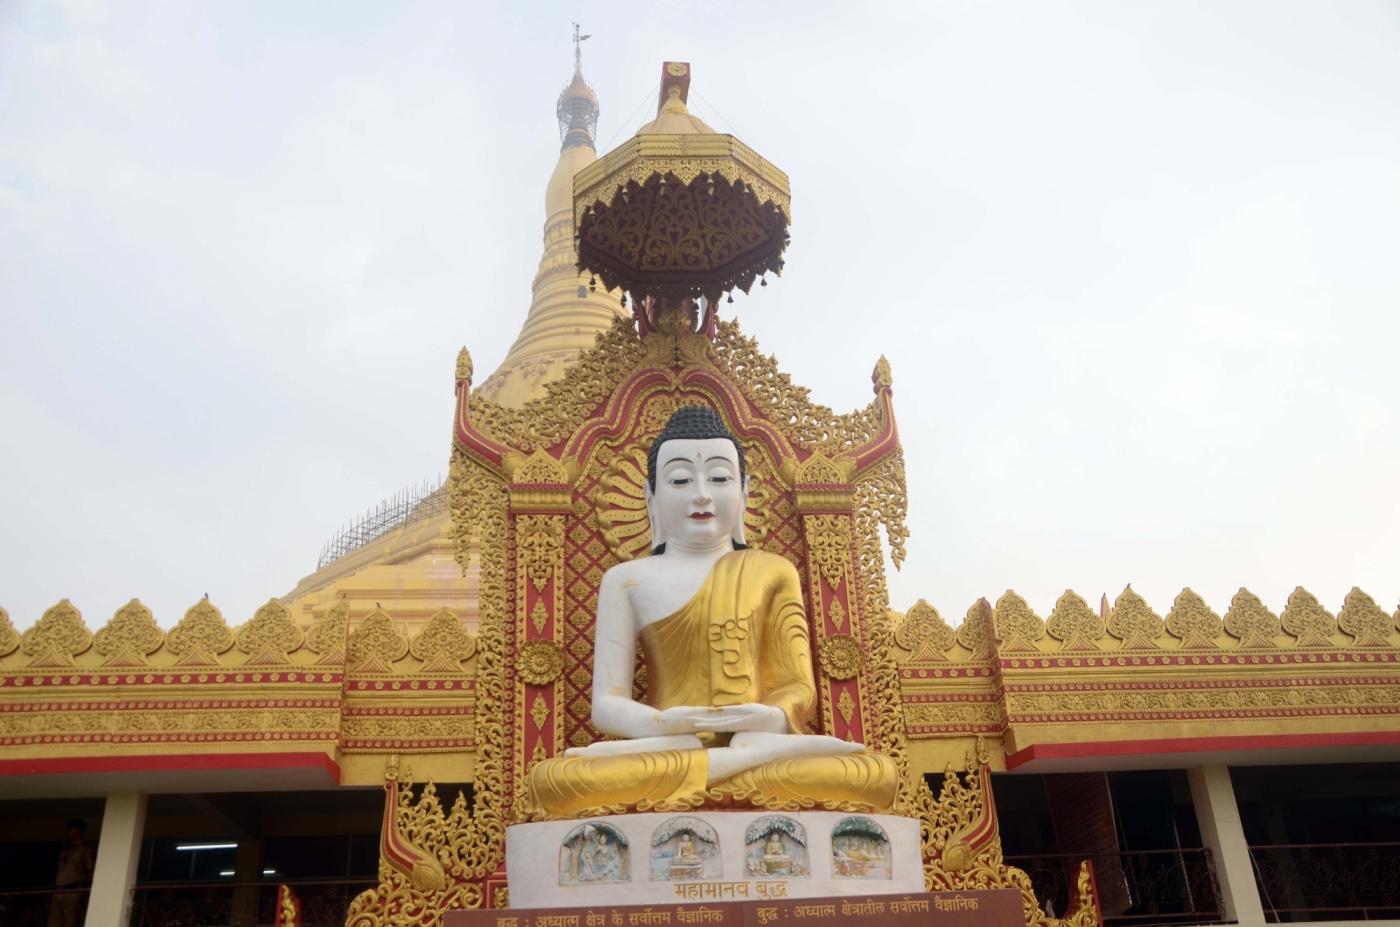 Mumbai: A view of the Buddha statue at Global Vipassana Pagoda in Mumbai on Jan 14, 2018. (Photo: IANS) by .